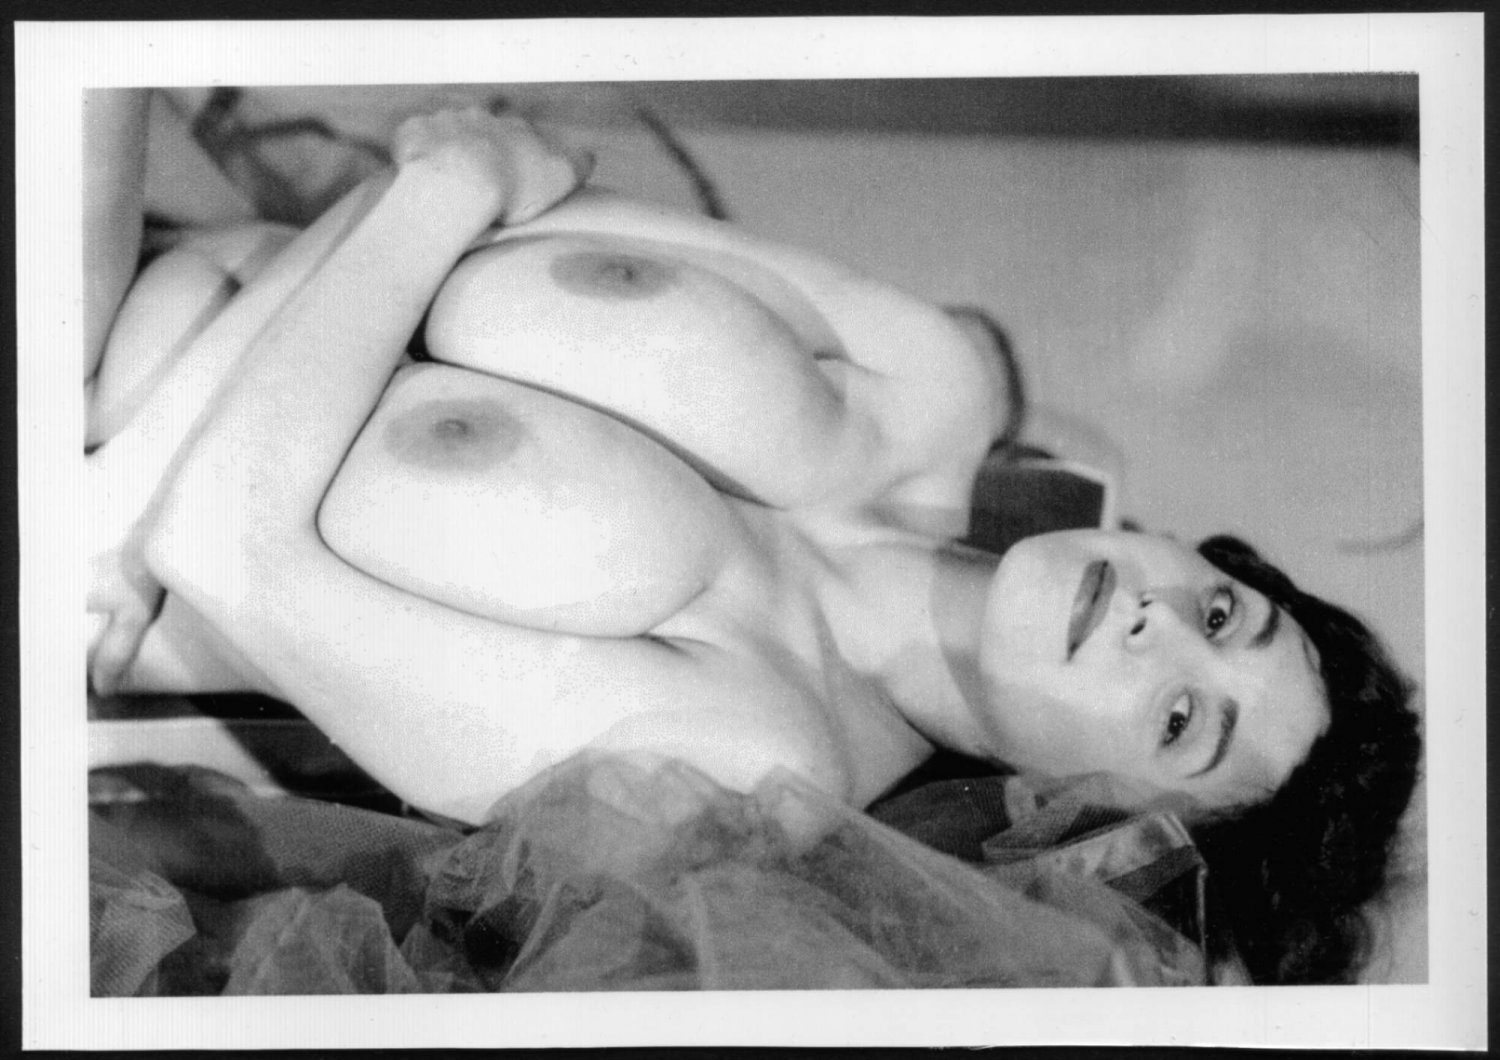 Linda west topless nude huge heavy hanging boobs pose 5X7 reprint LW-45.